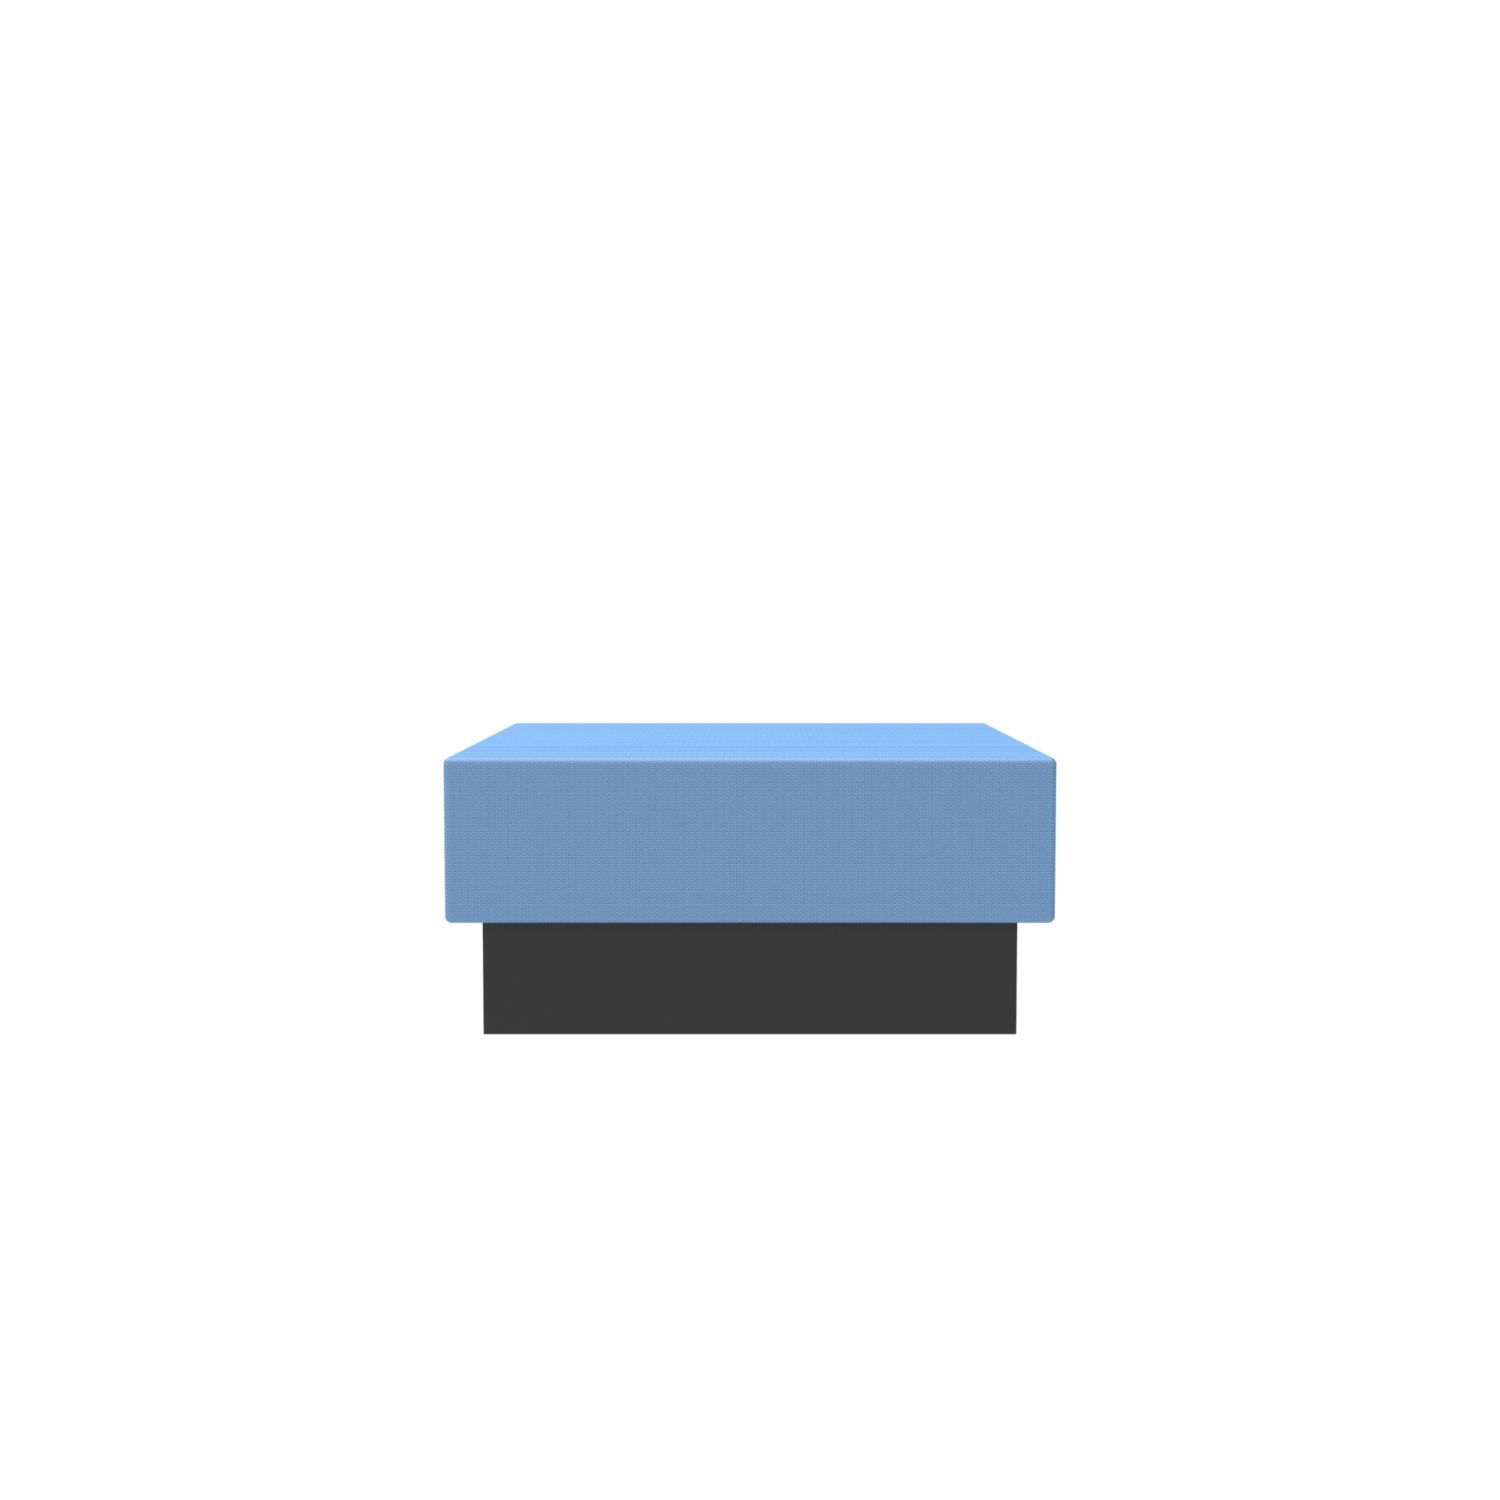 lensvelt oma blocks lounging edition closed base without backrest 90 cm width blue horizon 040 black ral9005 hard leg ends